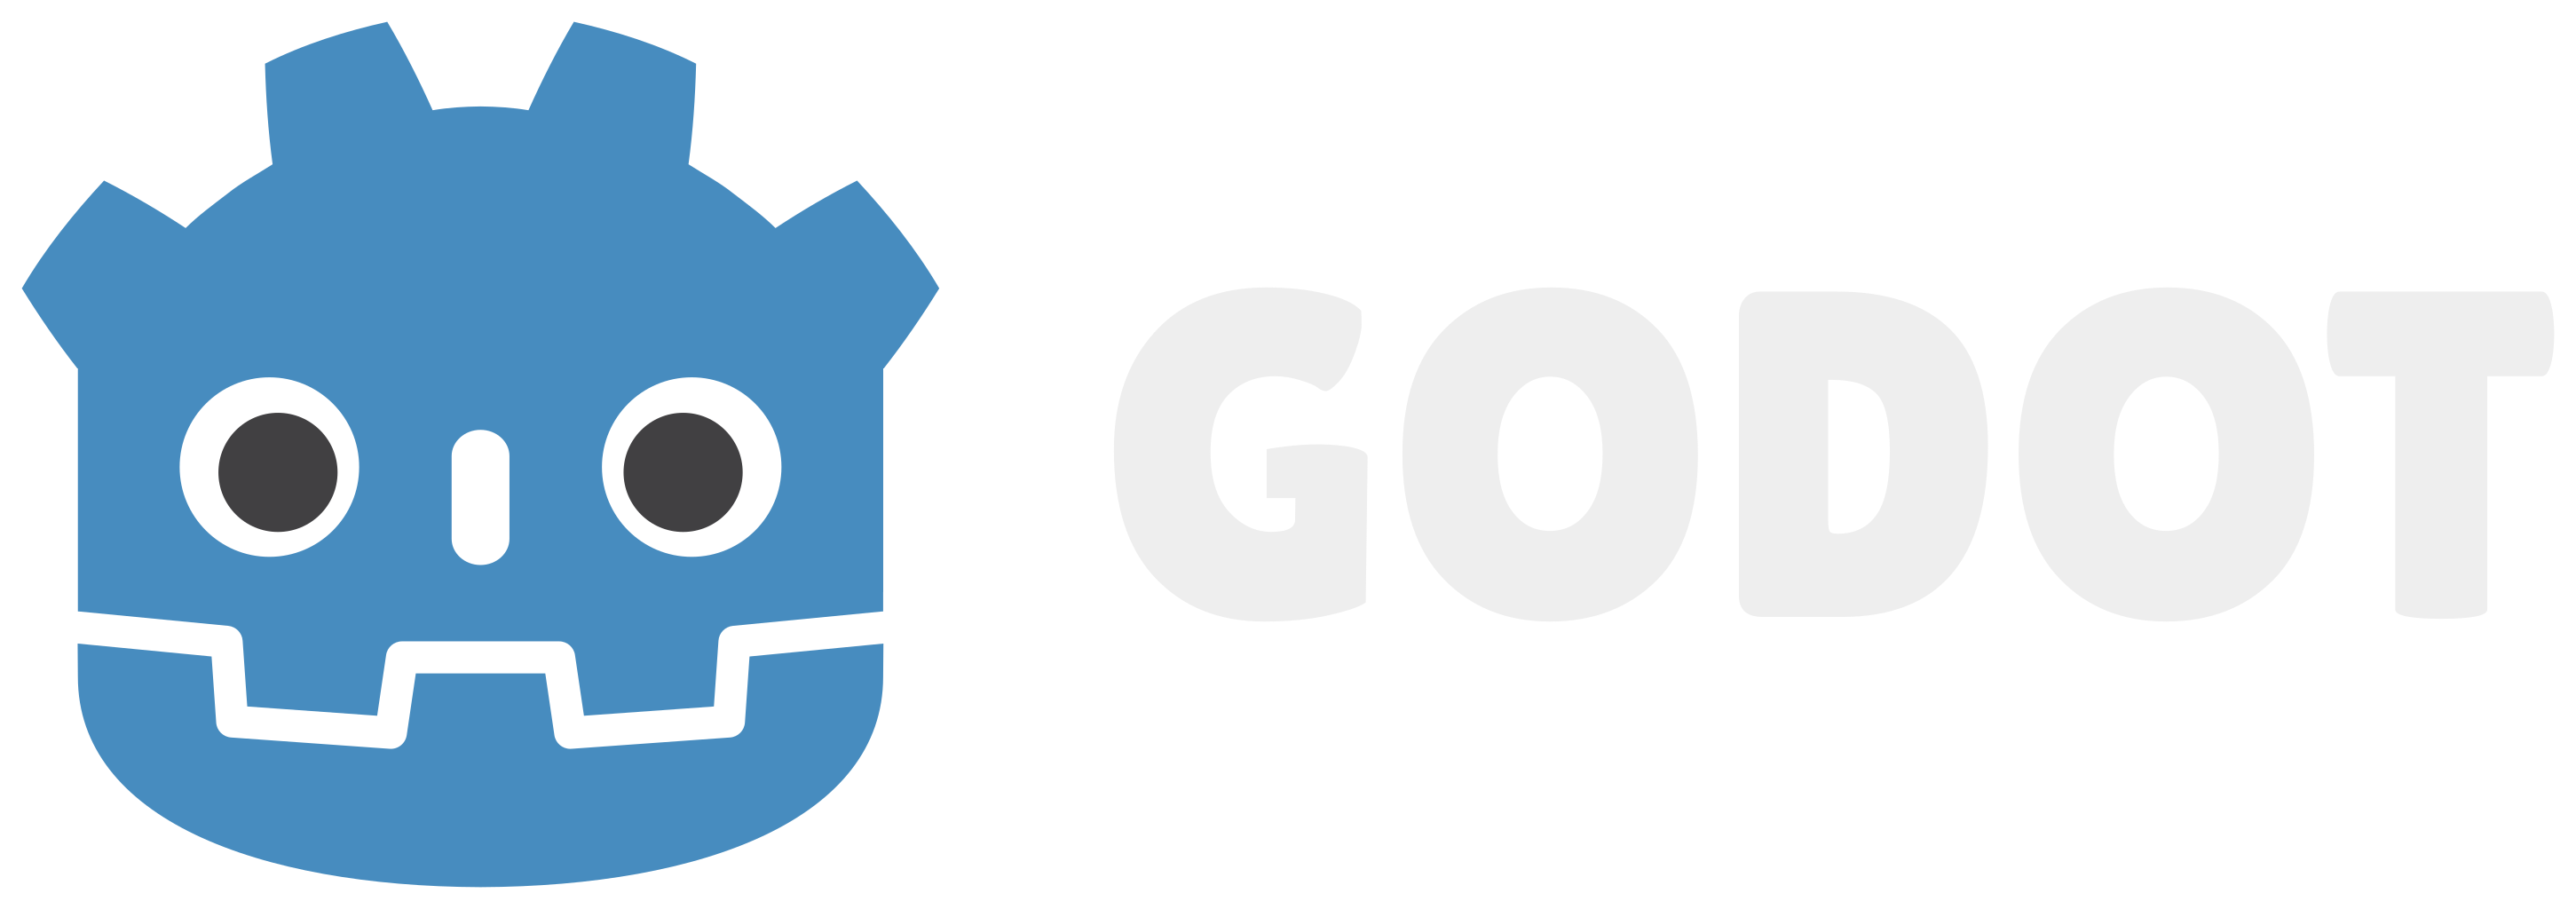 Godot Engine logo (colored for dark backgrounds)